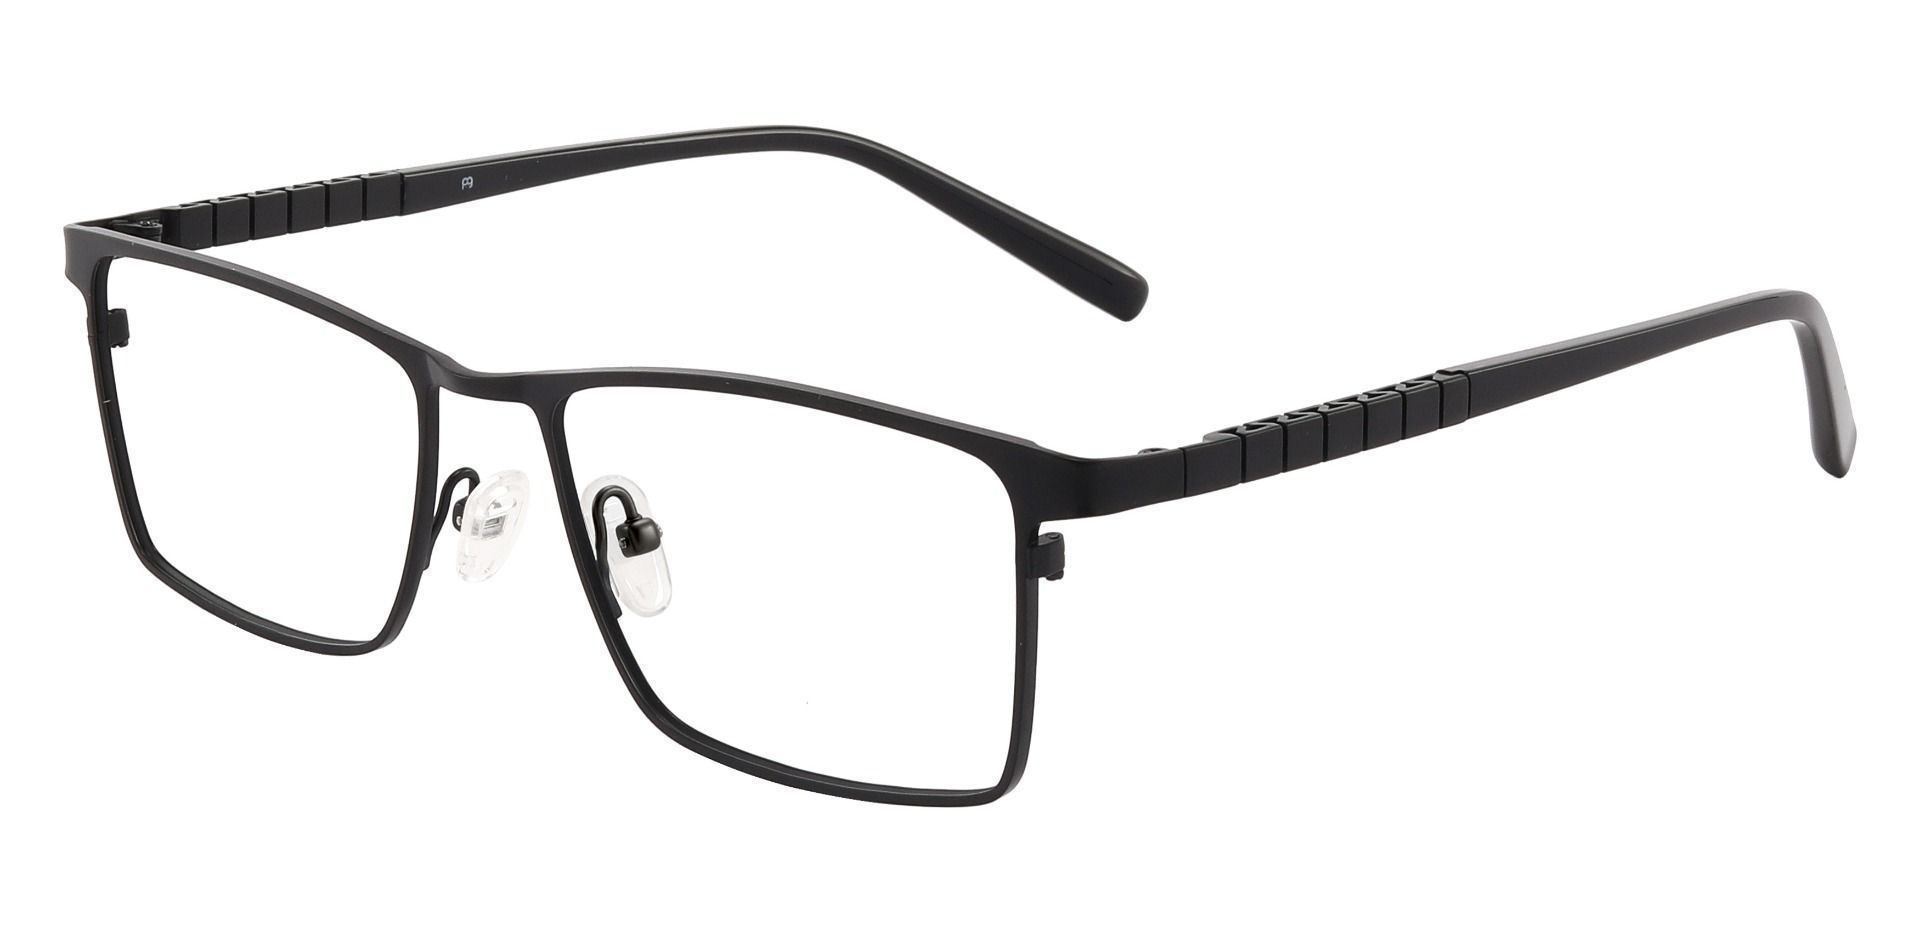 Cheshire Rectangle Eyeglasses Frame - Black